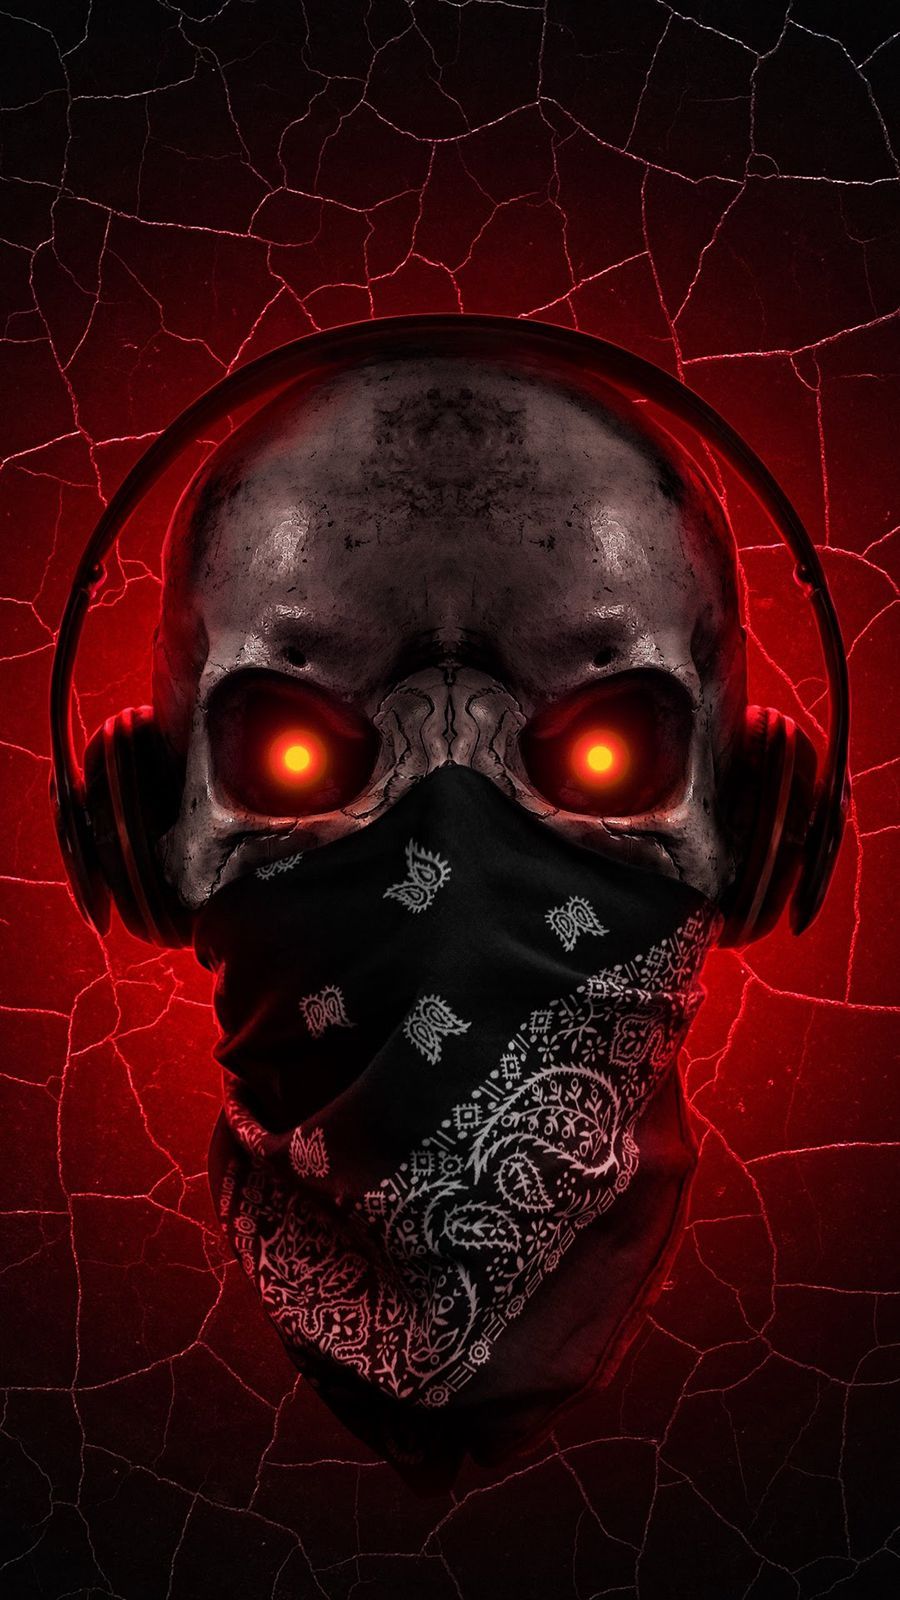 Blue Fire Skull Live Wallpaper APK cho Android - Tải về